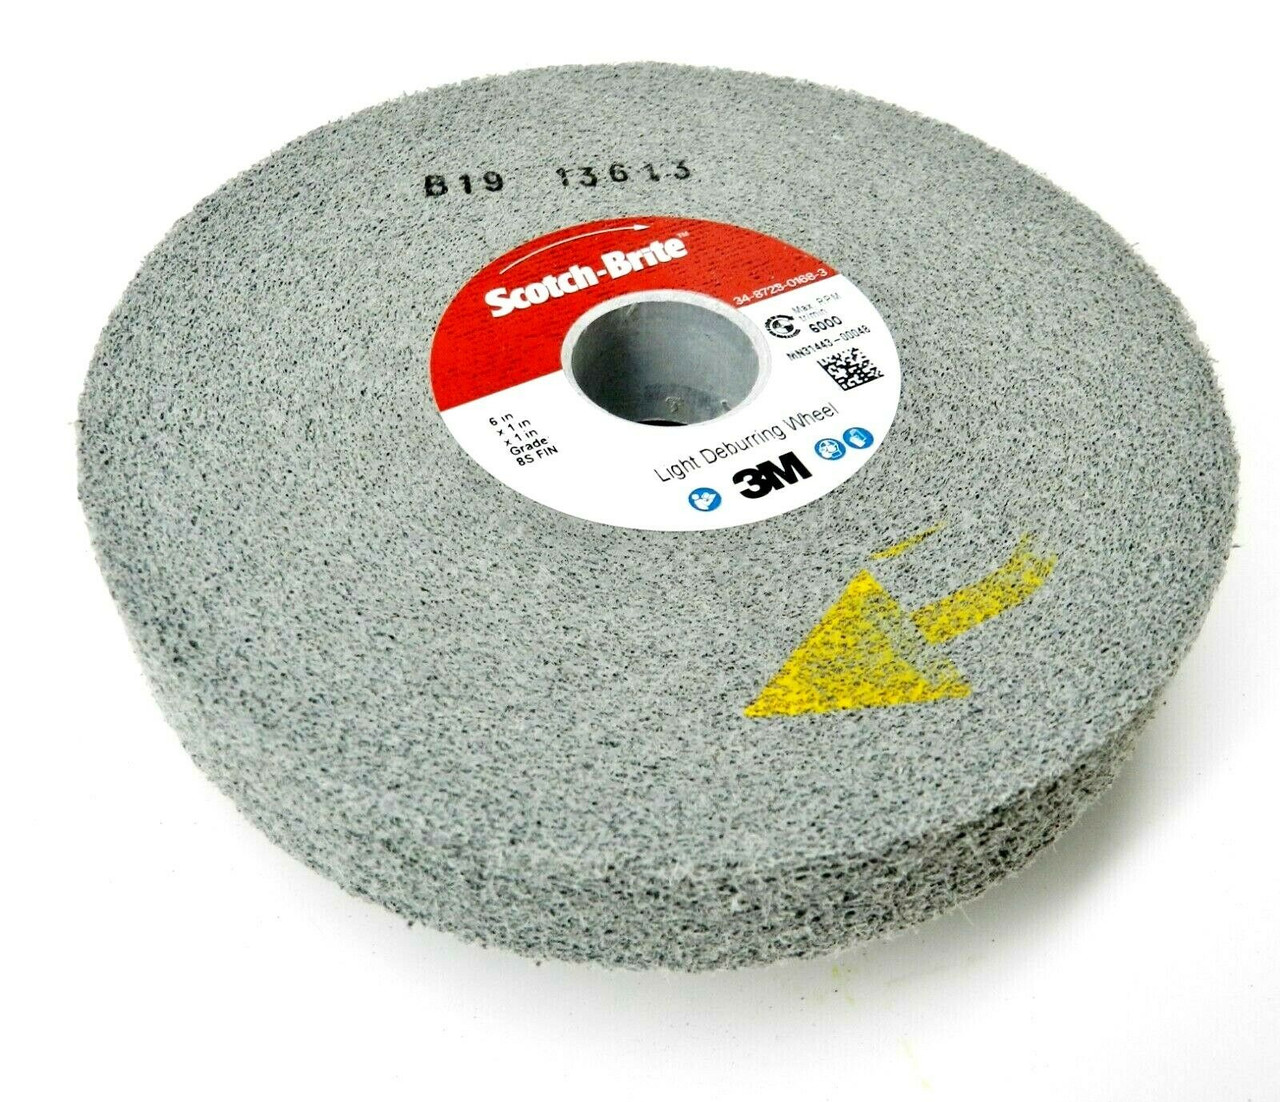 3M™ Rubber Cushion Polishing Wheel